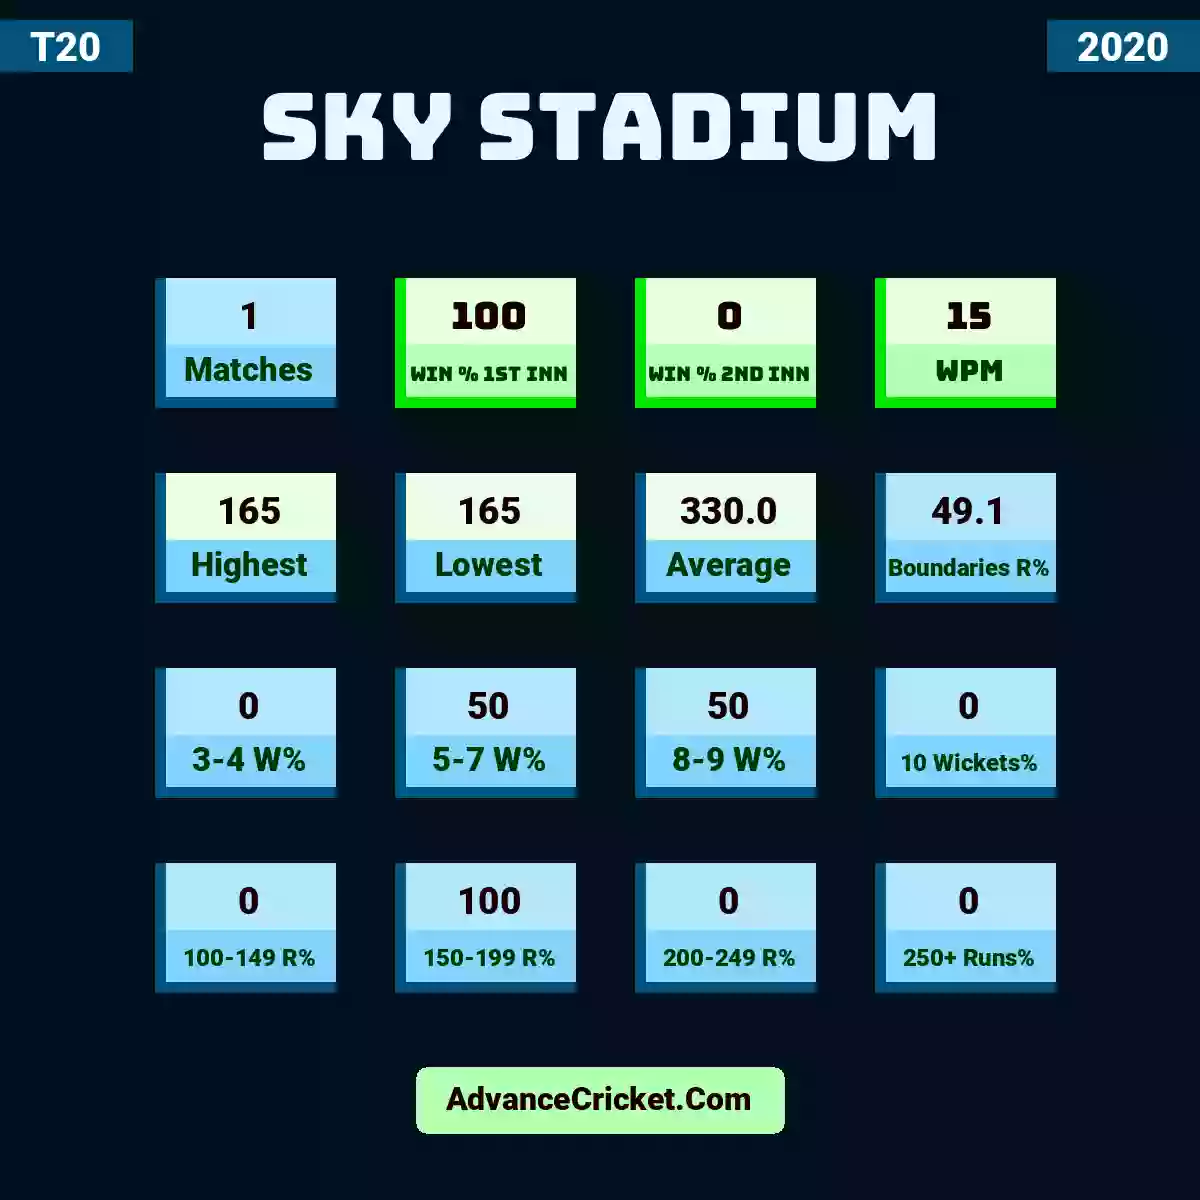 Image showing Sky Stadium with Matches: 1, Win % 1st Inn: 100, Win % 2nd Inn: 0, WPM: 15, Highest: 165, Lowest: 165, Average: 330.0, Boundaries R%: 49.1, 3-4 W%: 0, 5-7 W%: 50, 8-9 W%: 50, 10 Wickets%: 0, 100-149 R%: 0, 150-199 R%: 100, 200-249 R%: 0, 250+ Runs%: 0.